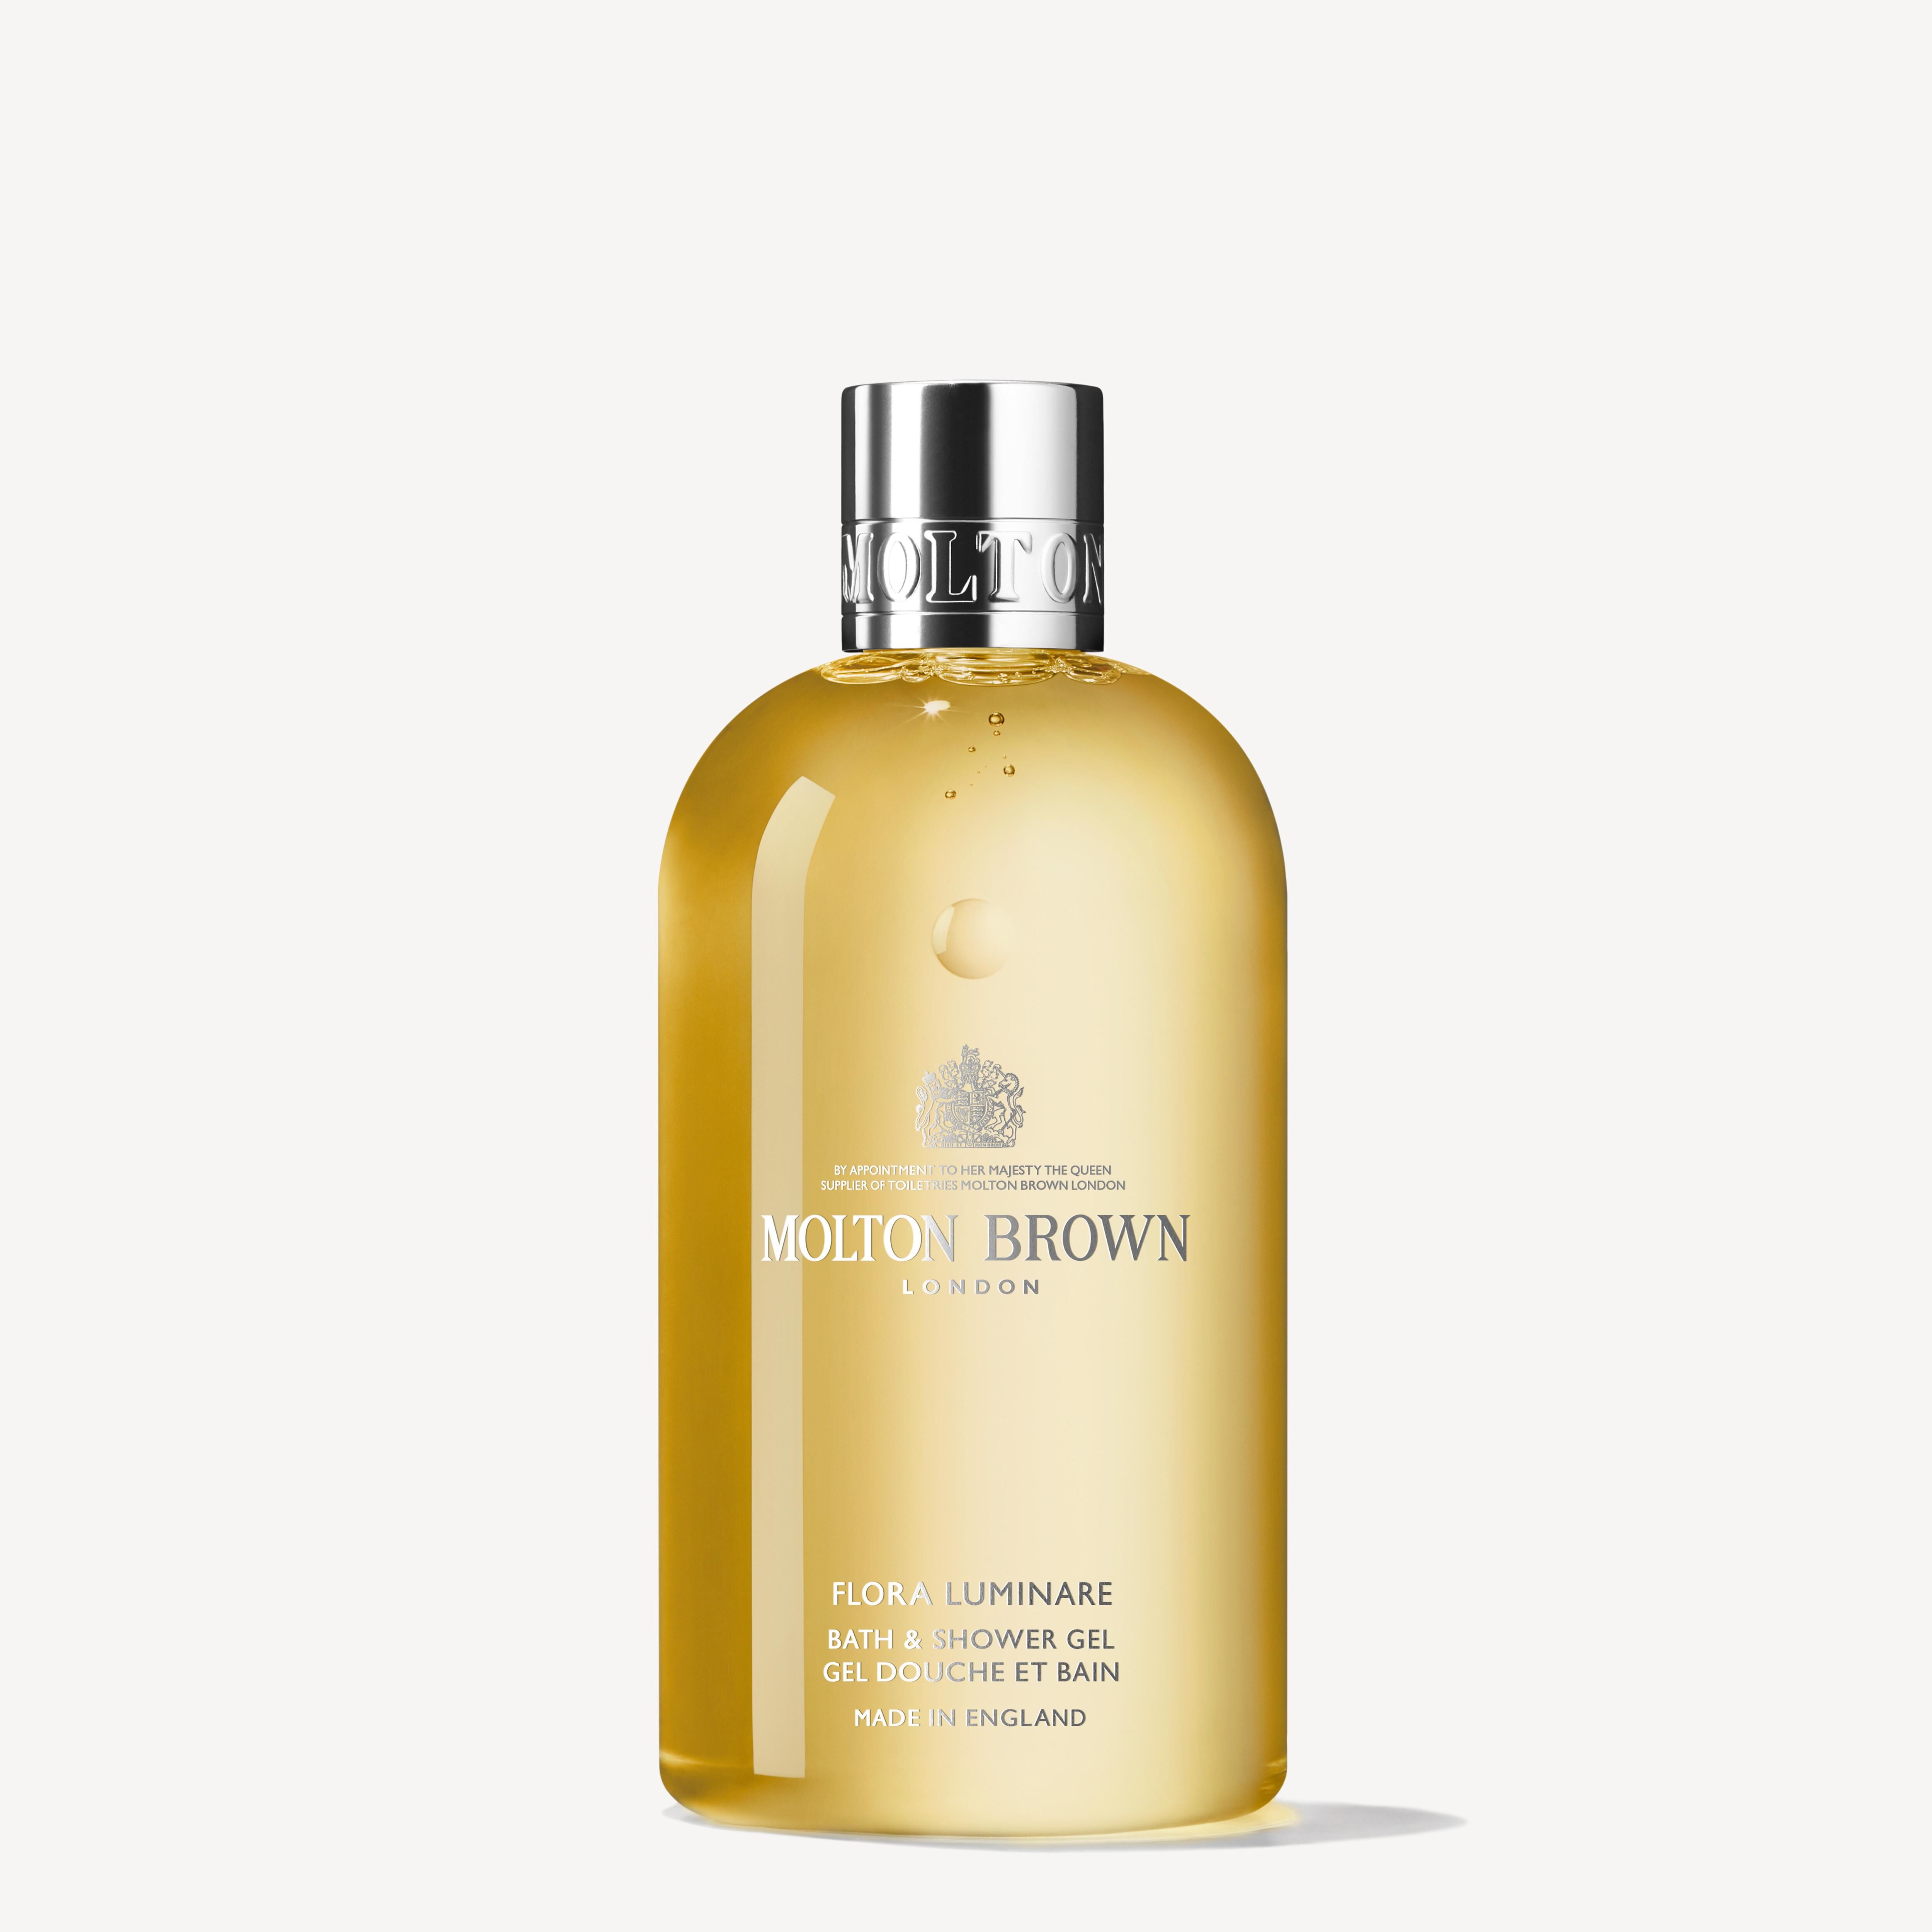 Molton Brown Flora Luminare Bath & Shower Gel 10fl oz